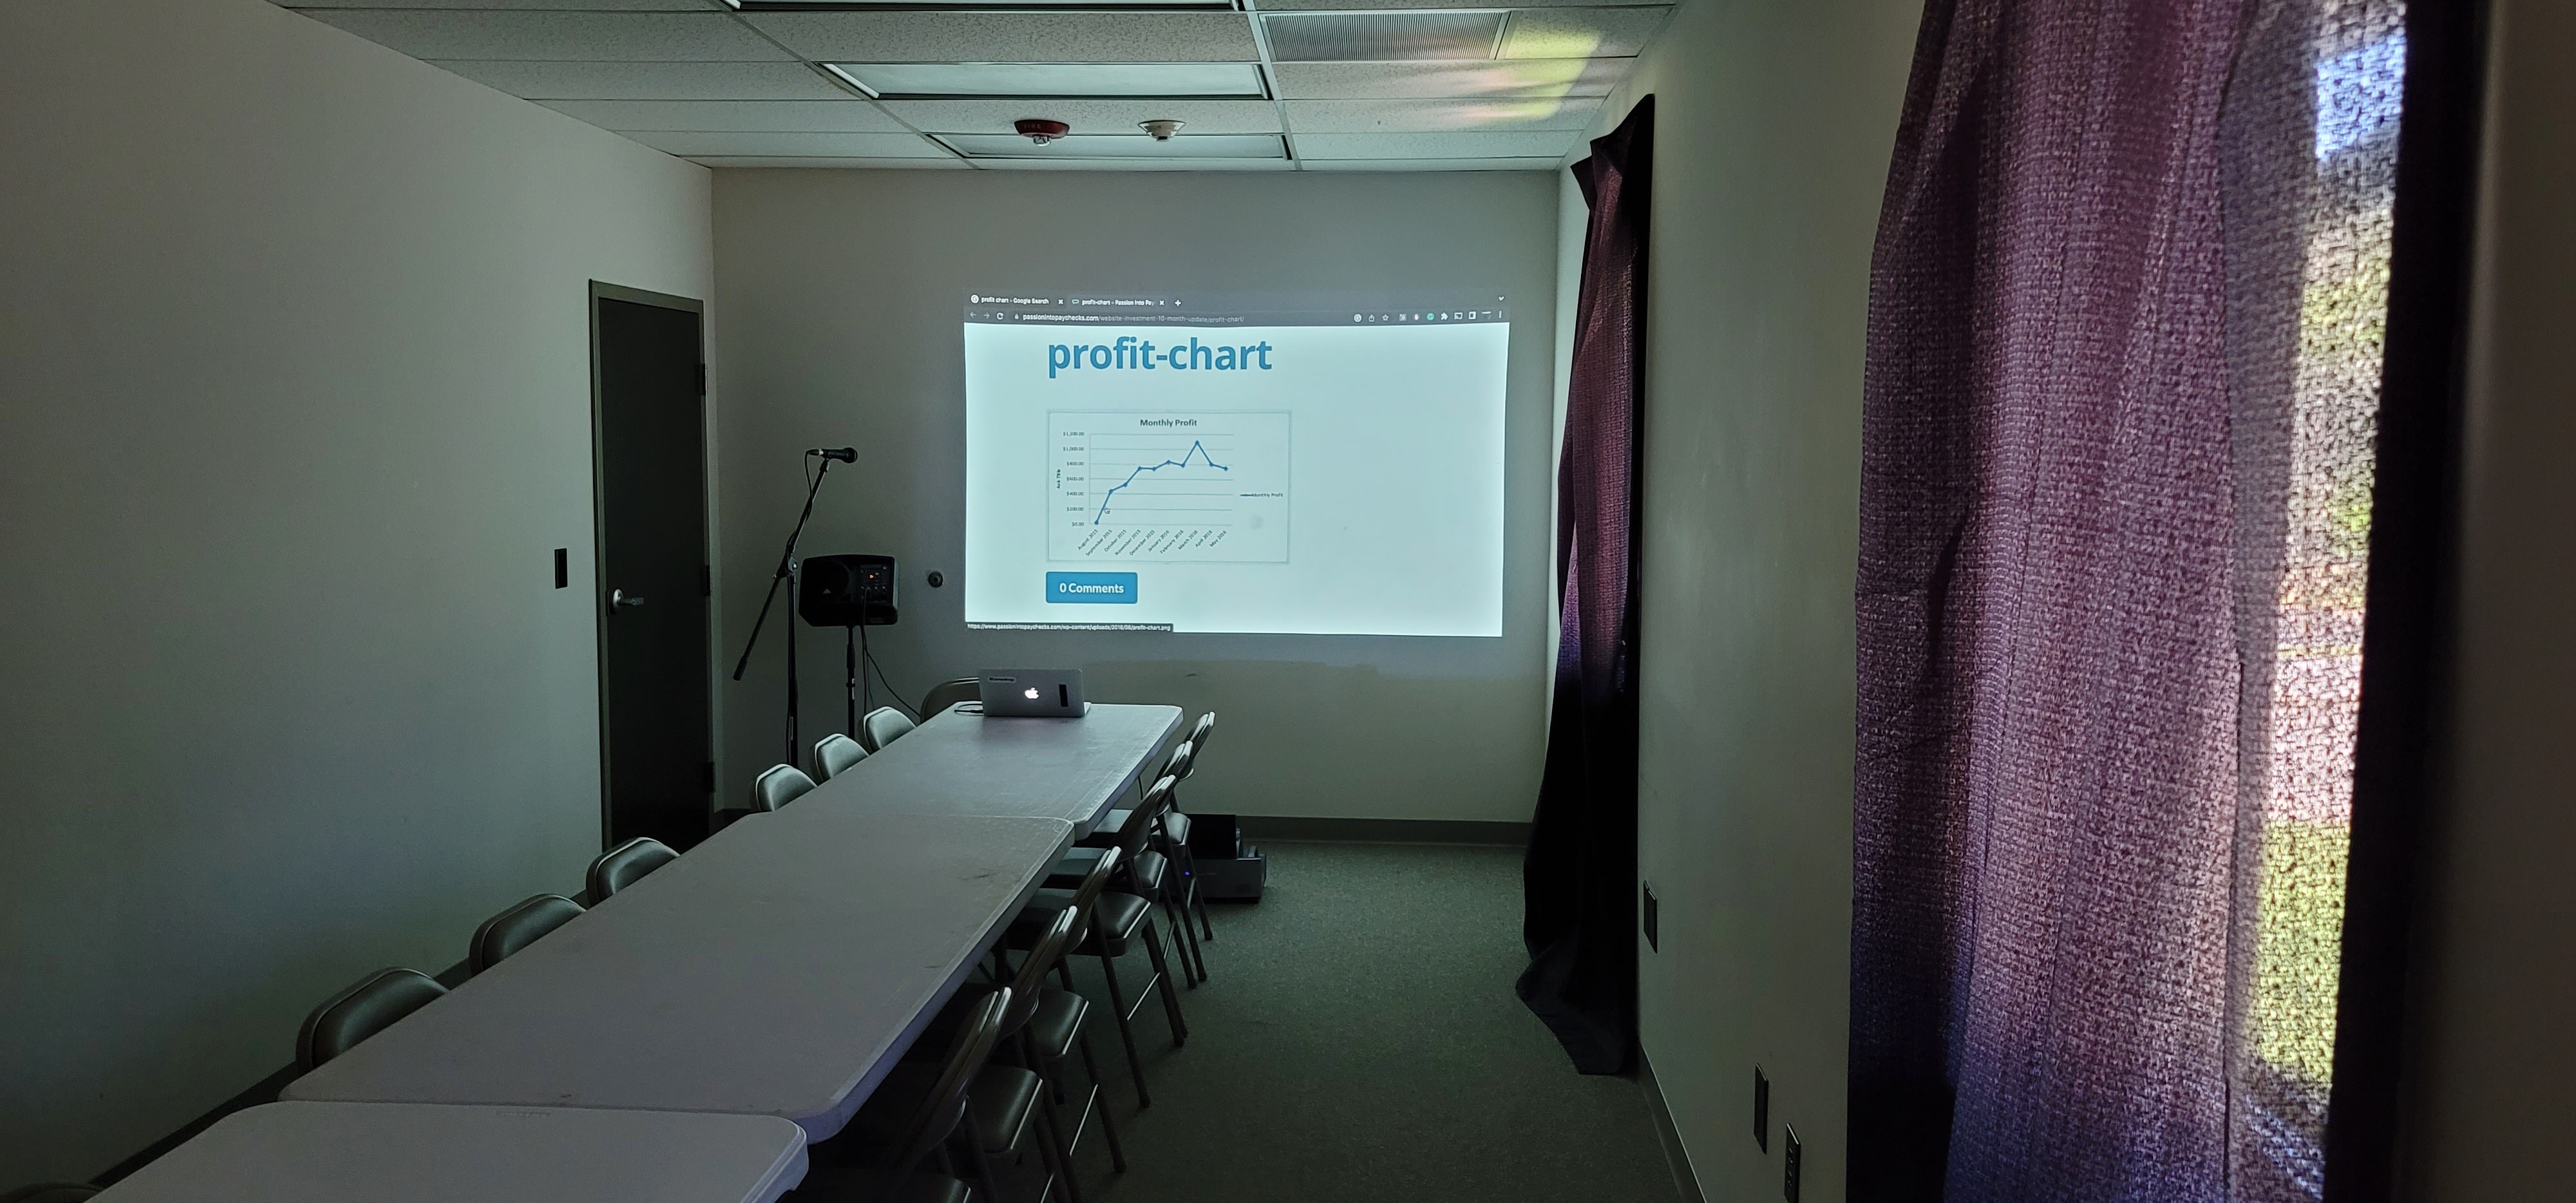 Meetting Setup Projector.jpg